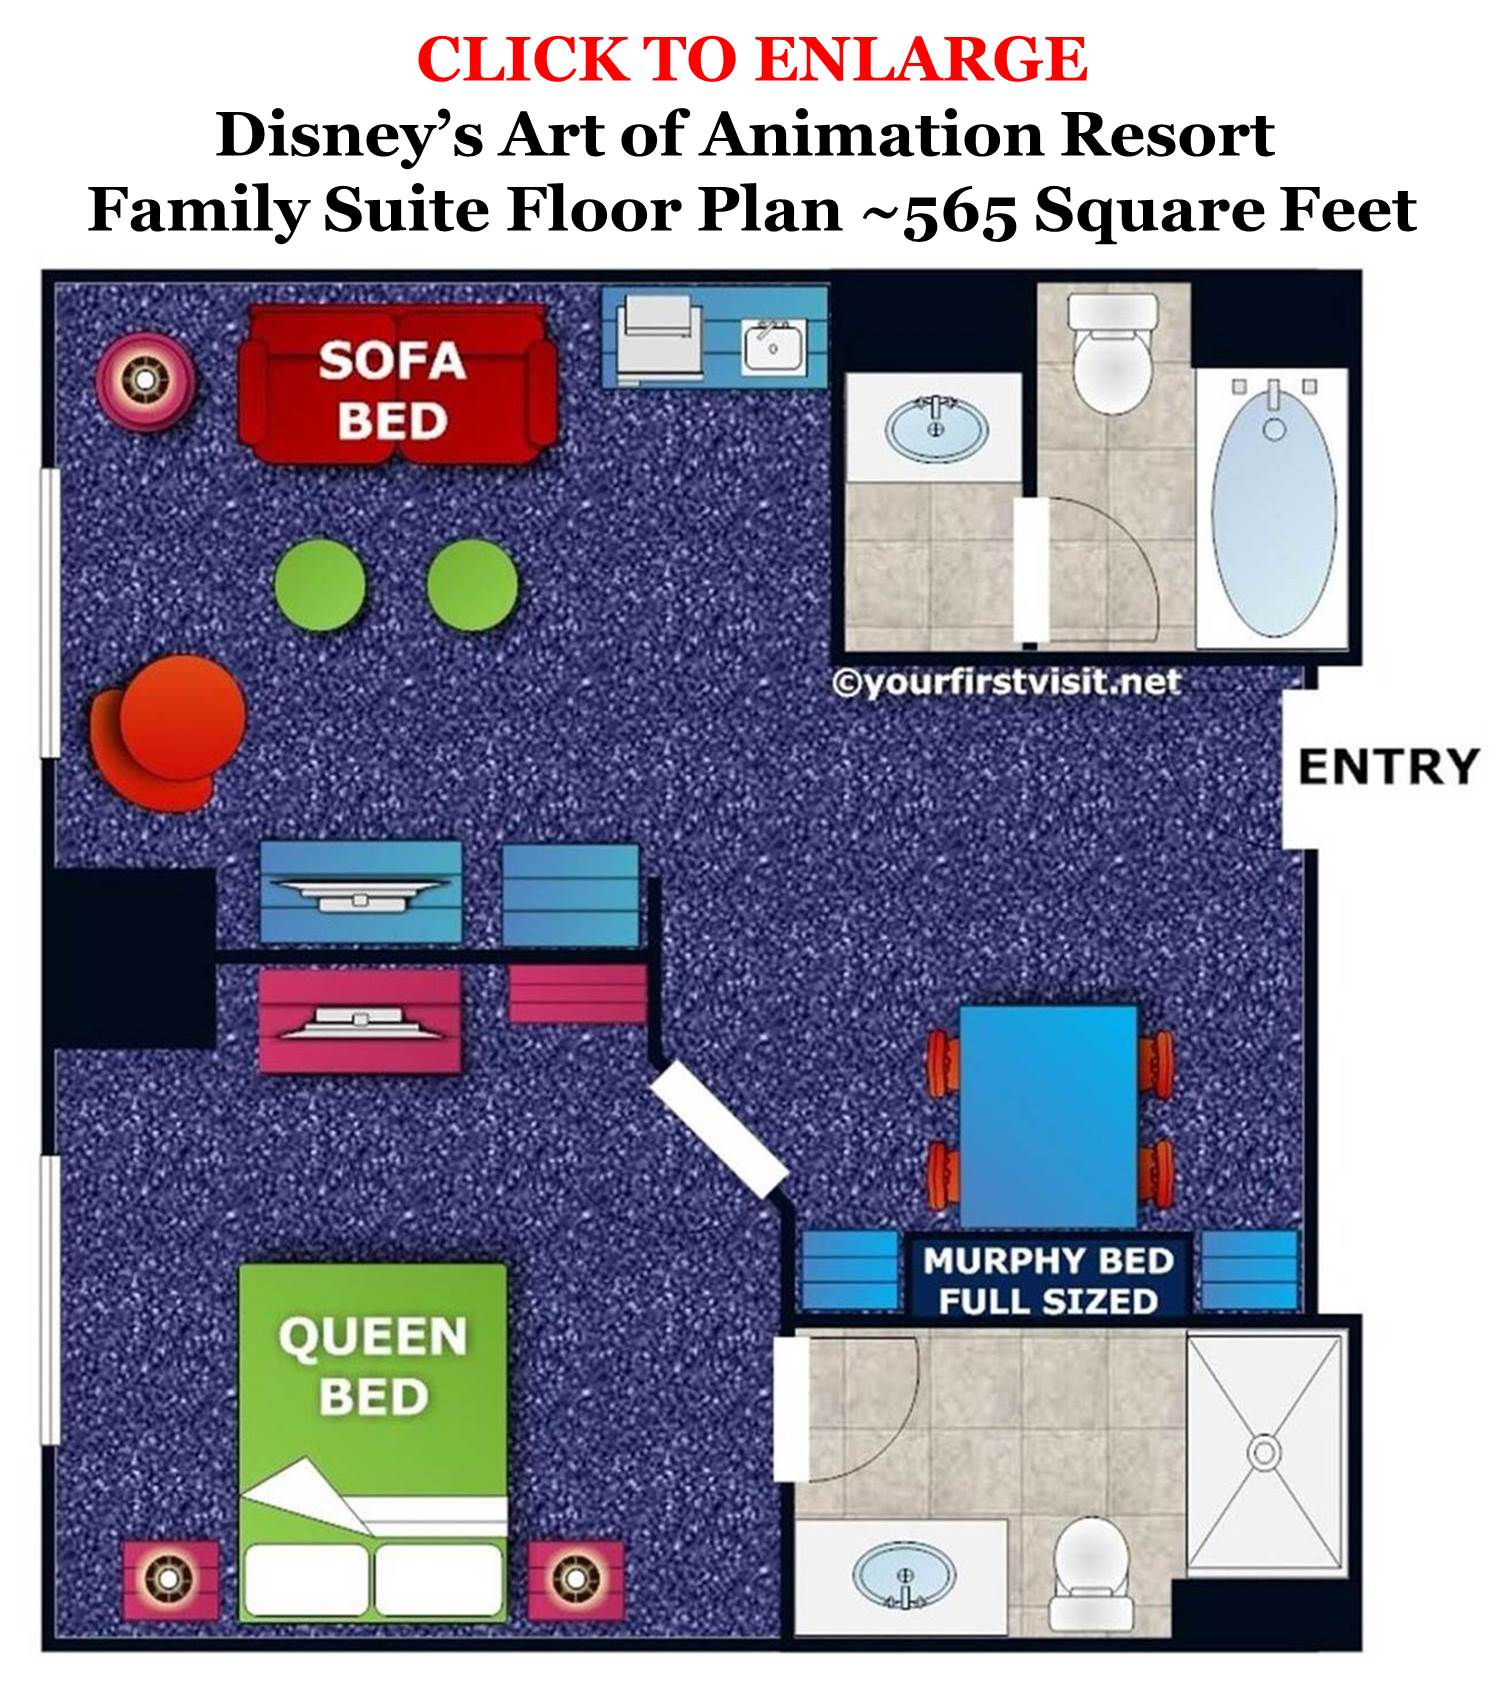 Family Suite Floor Plan Disney's Art of Animation Resort from yourfirstvisit.net